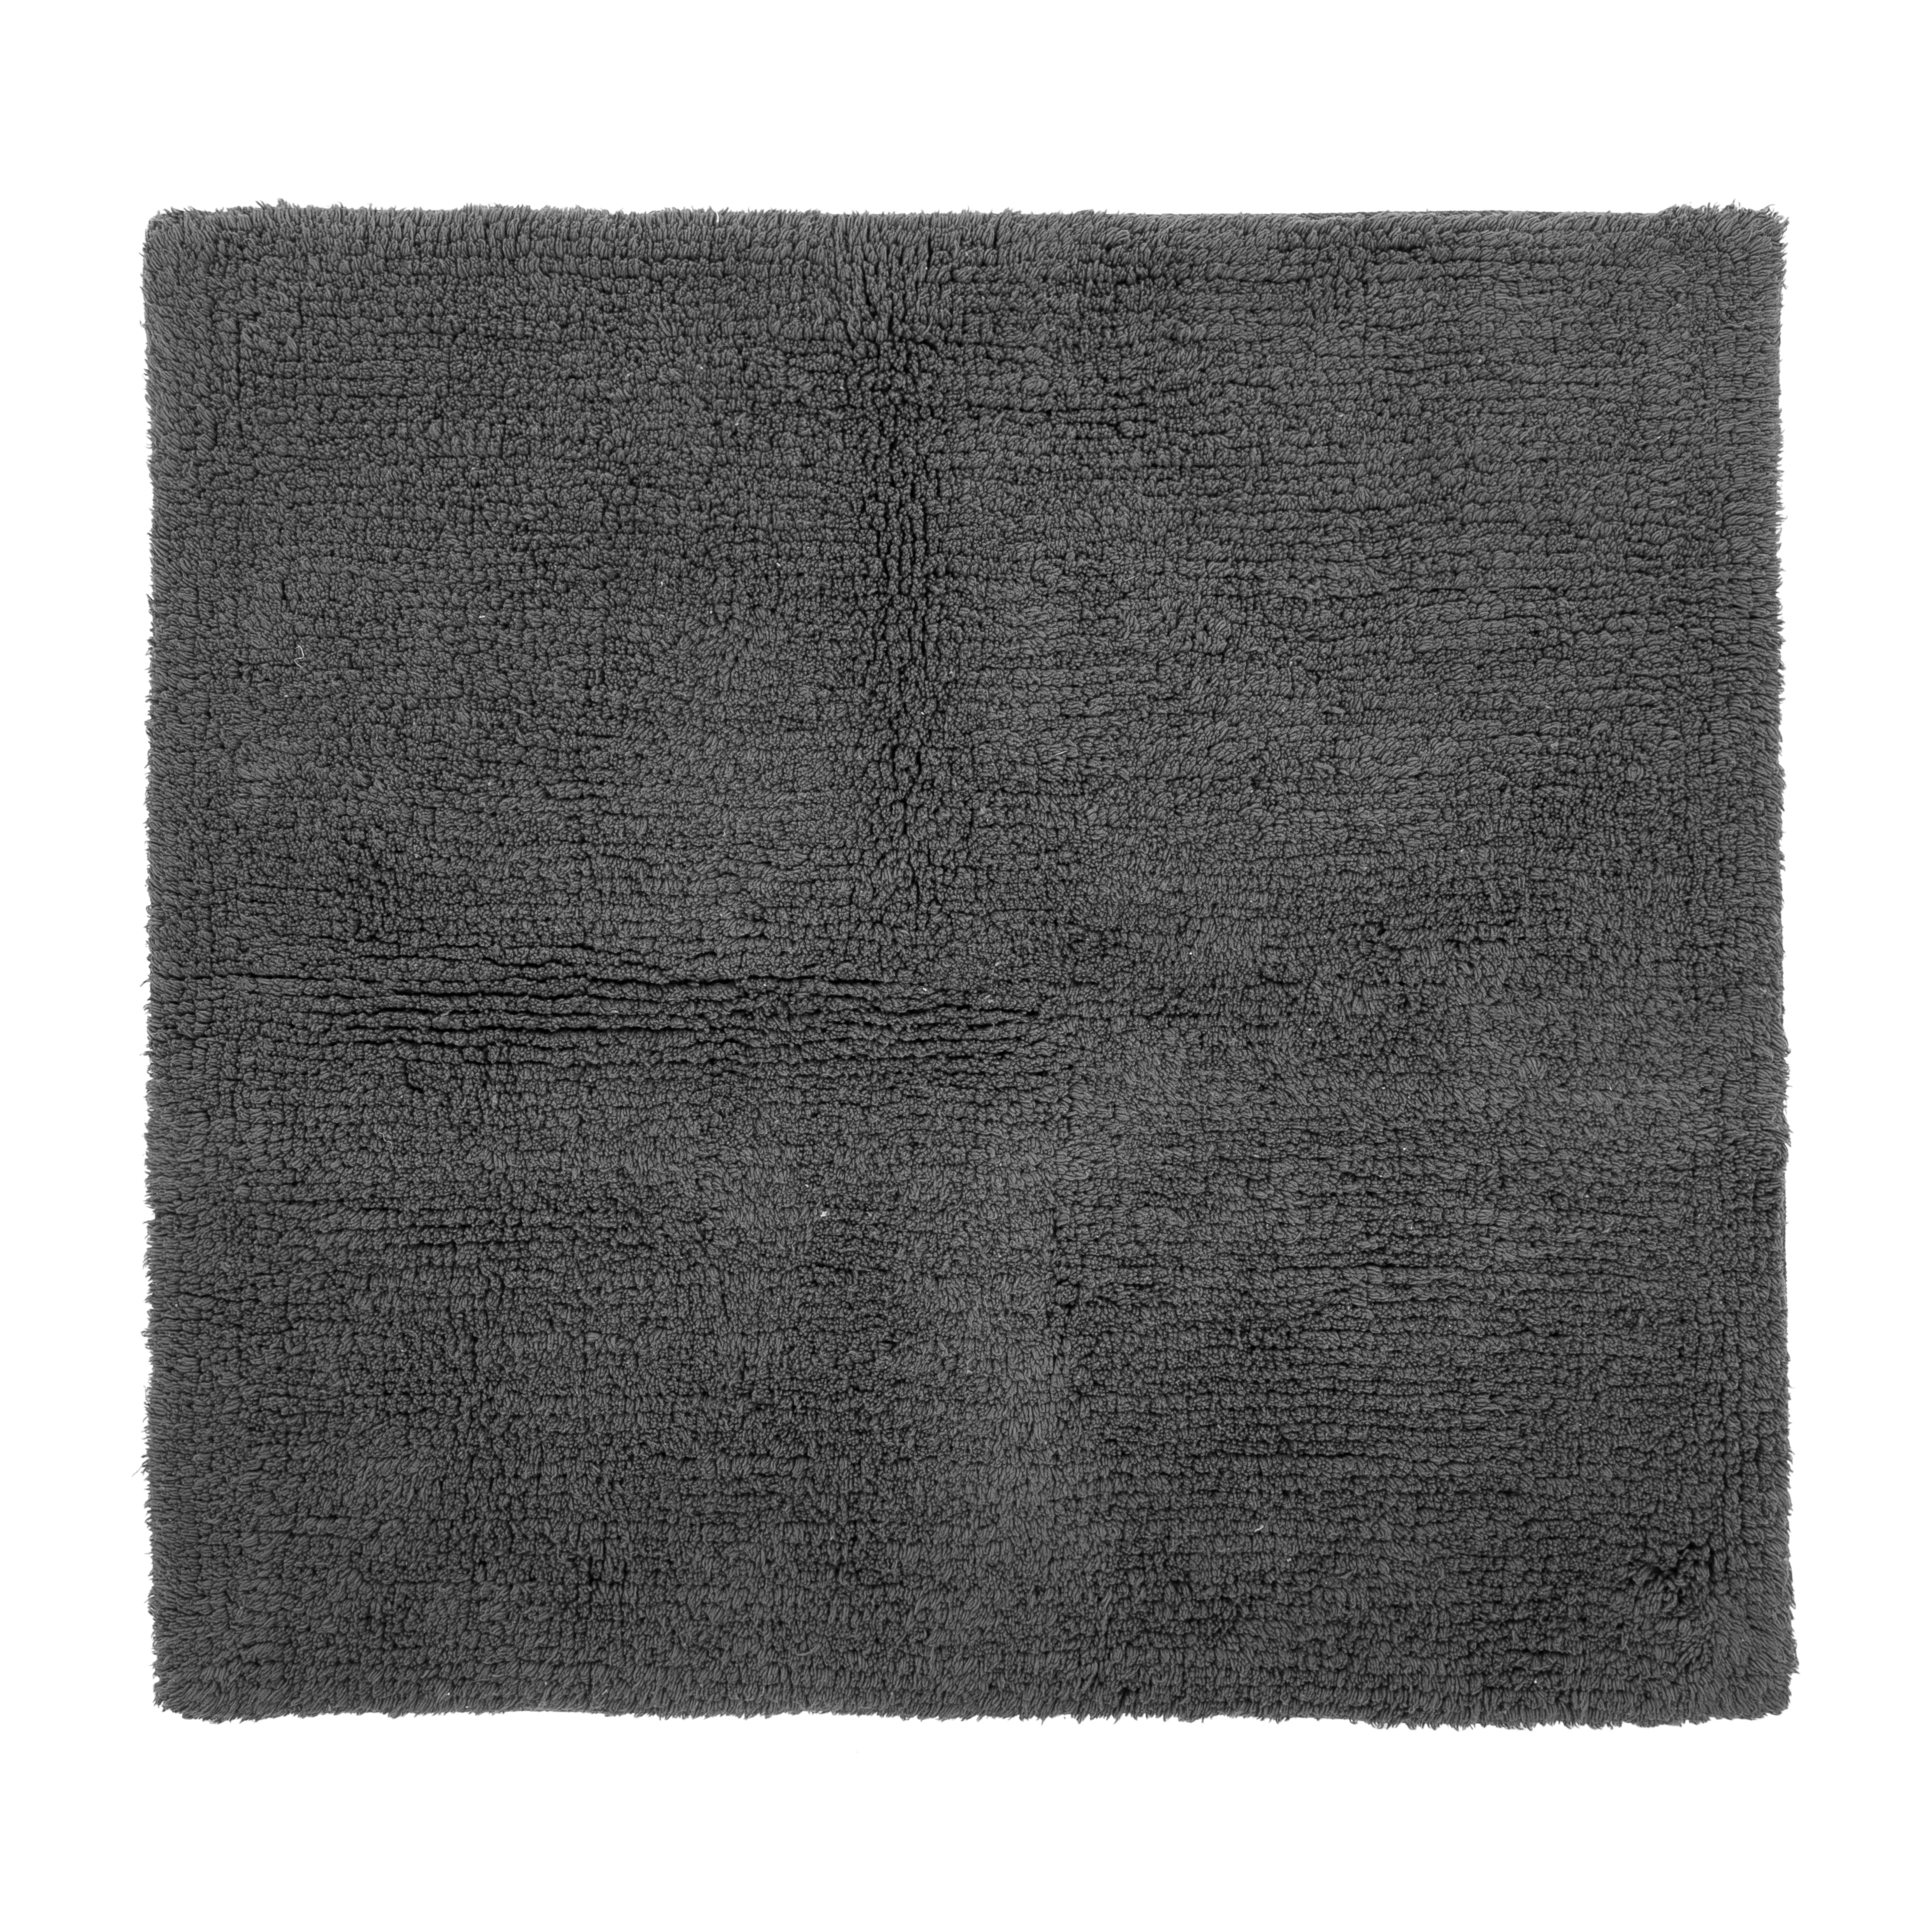 RIVA bath carpet - cotton anti-slip, 60x60cm, grey